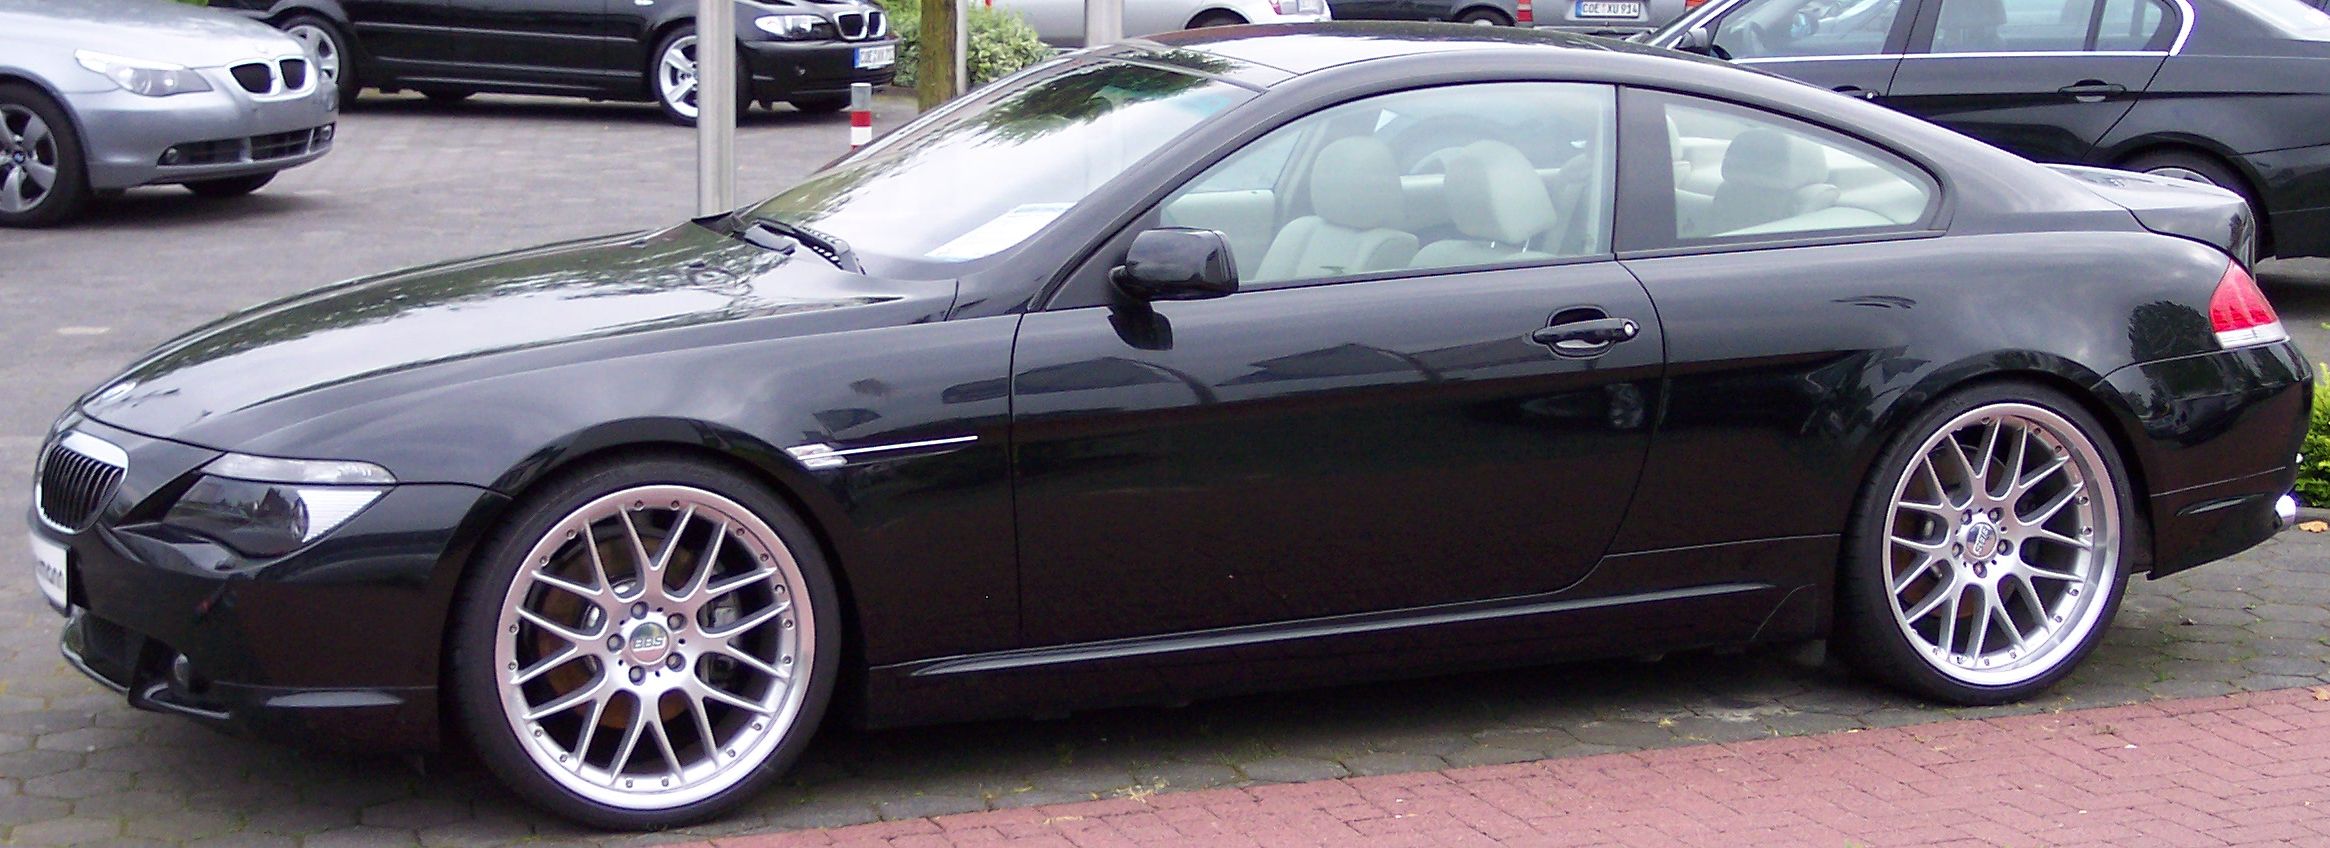 File:BMW Series6 black l.jpg